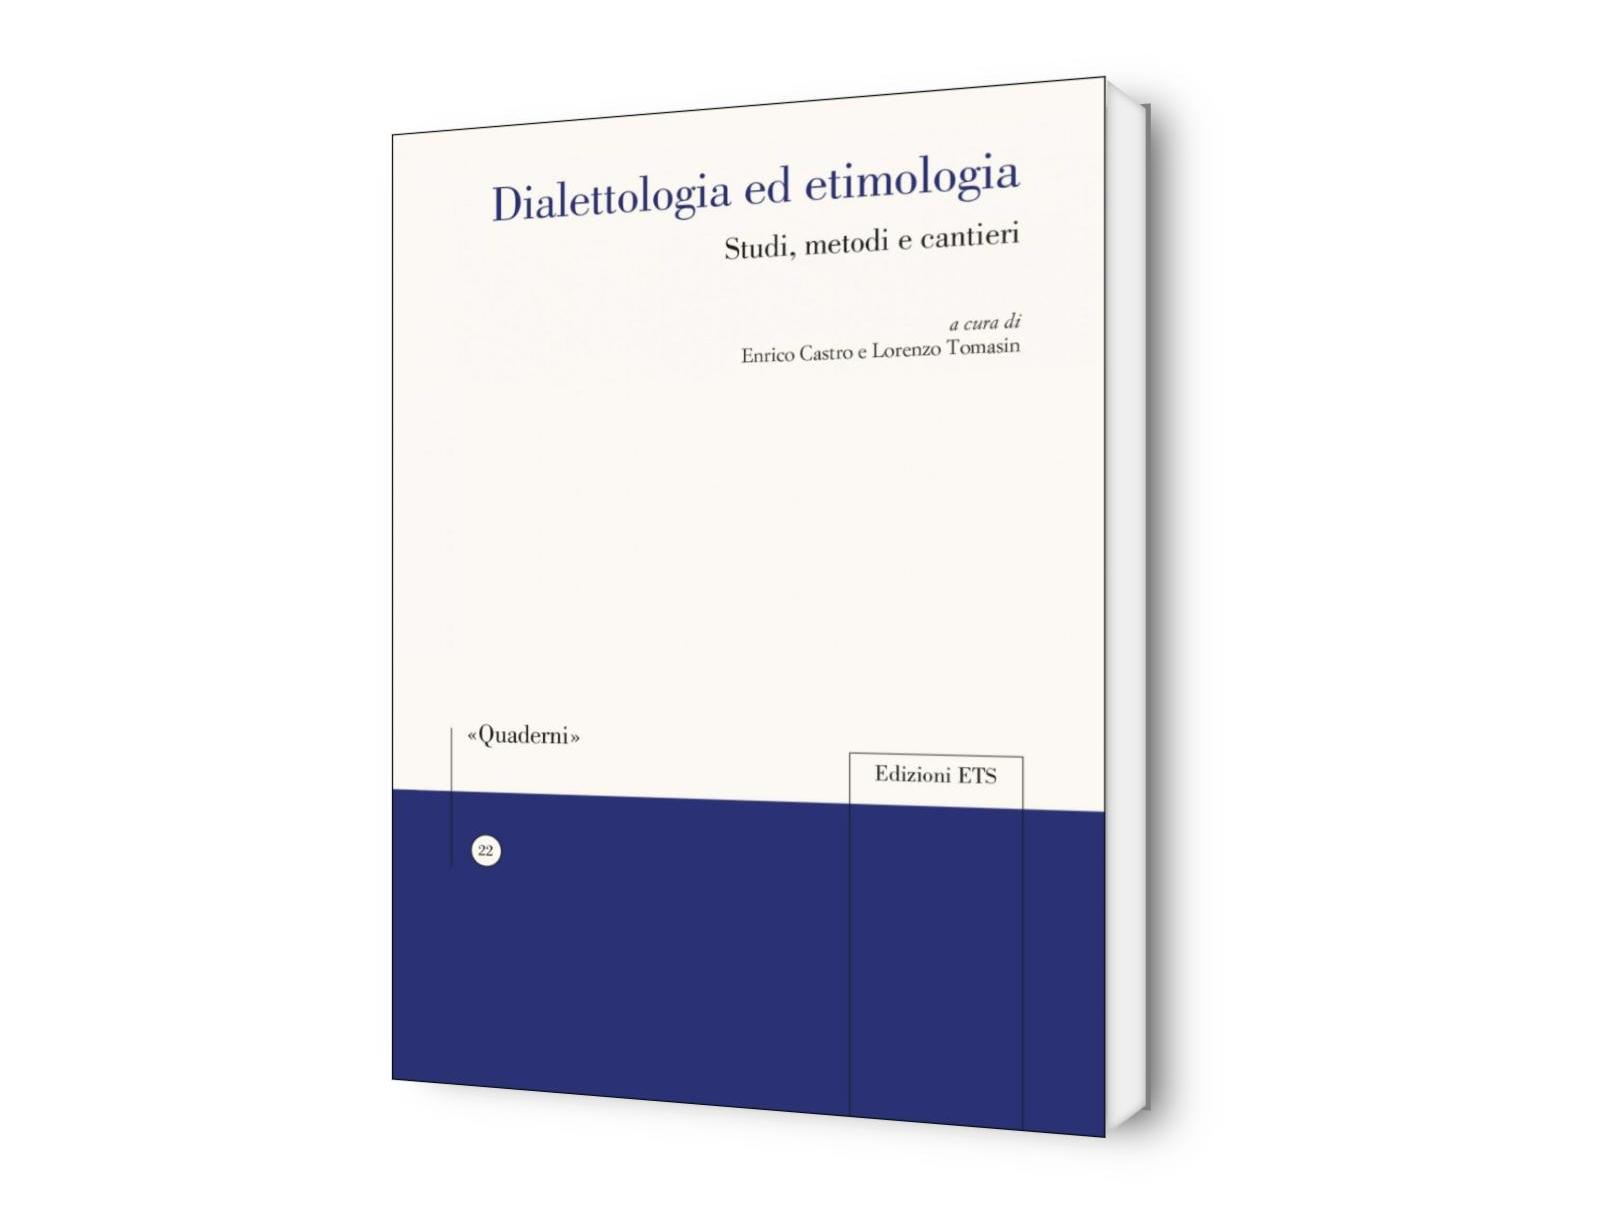 Dialettologia ed etimologia. Studi, metodi e cantieri